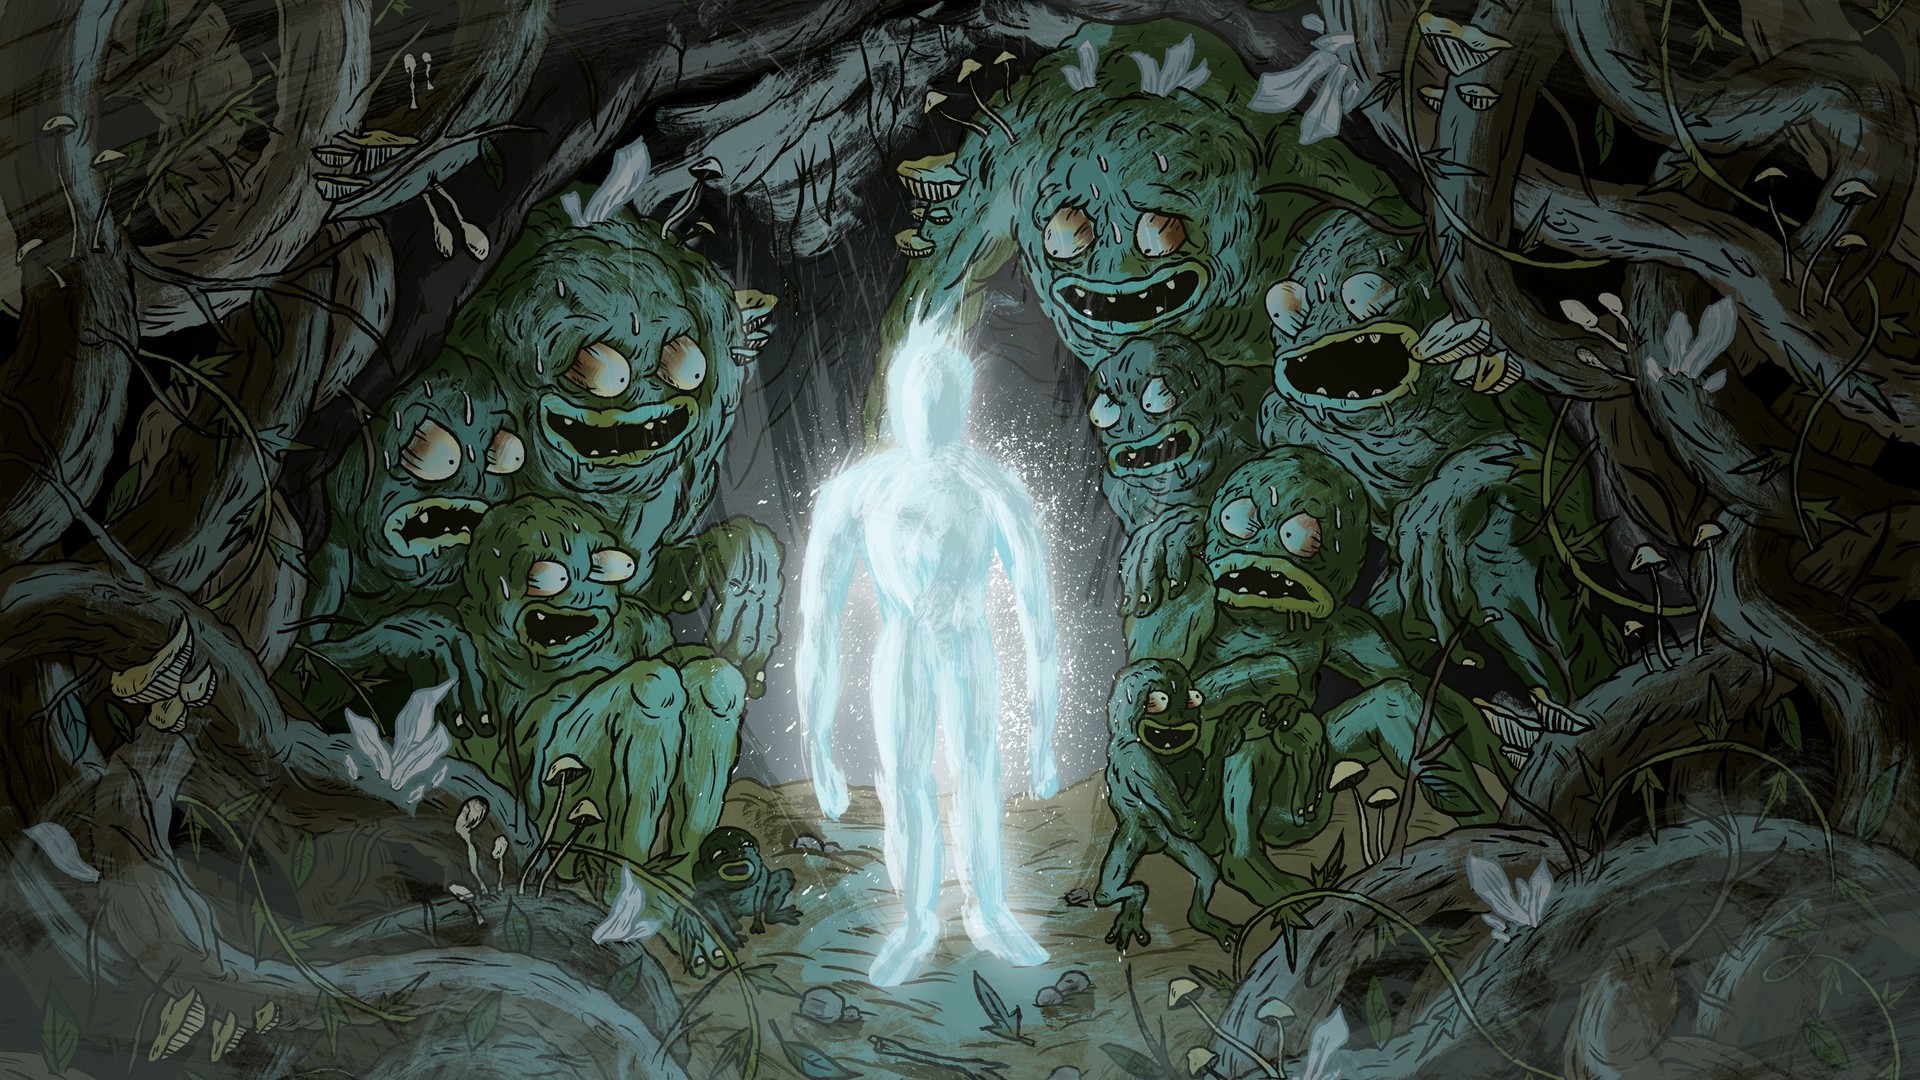 General 1920x1080 digital art fantasy art creature men ghost drawing mushroom open mouth branch trees glowing